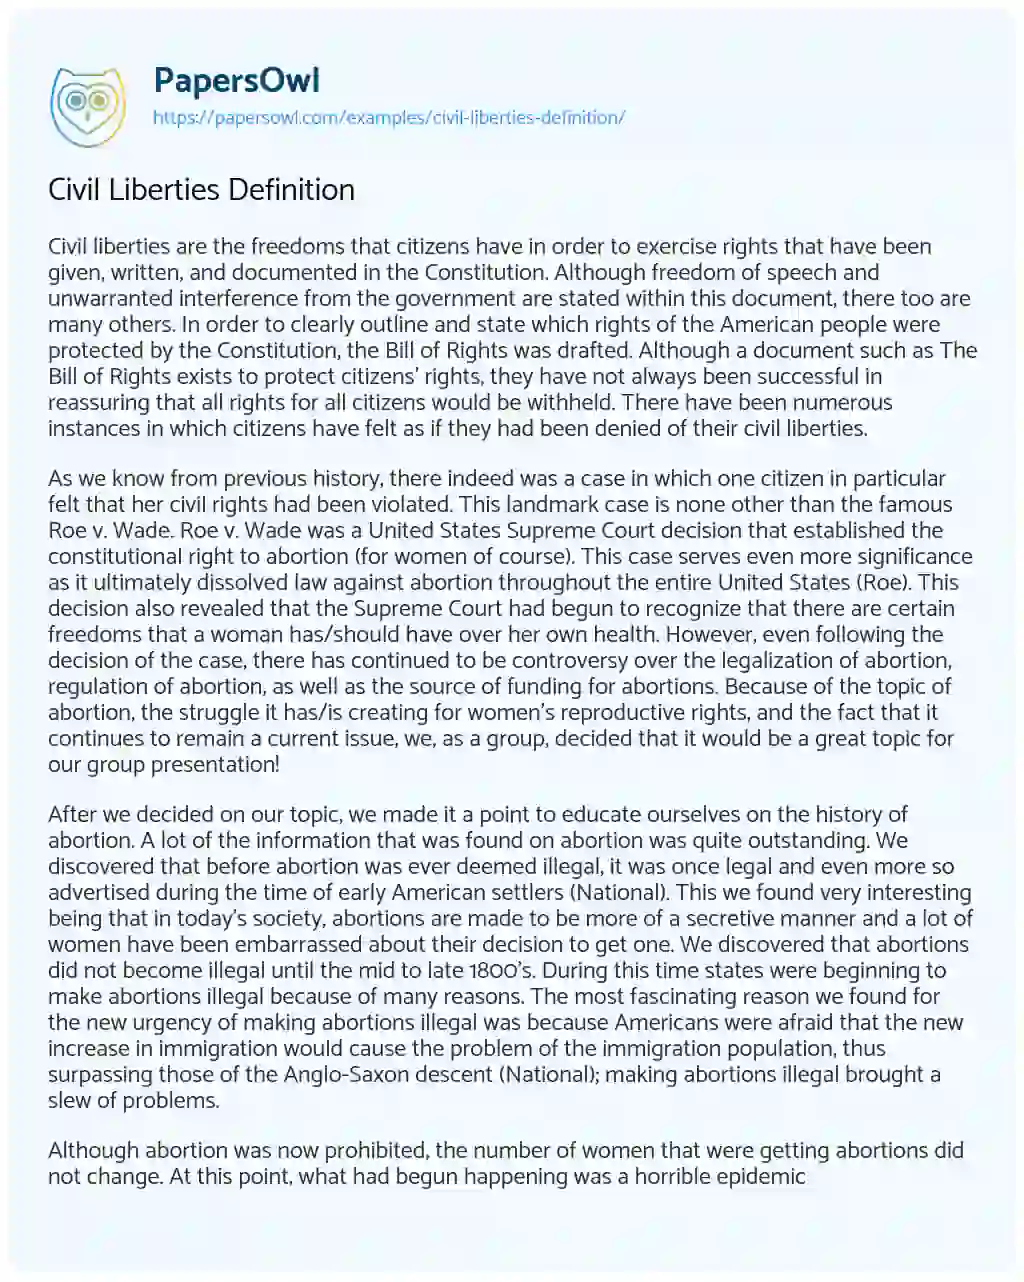 Civil Liberties Definition essay